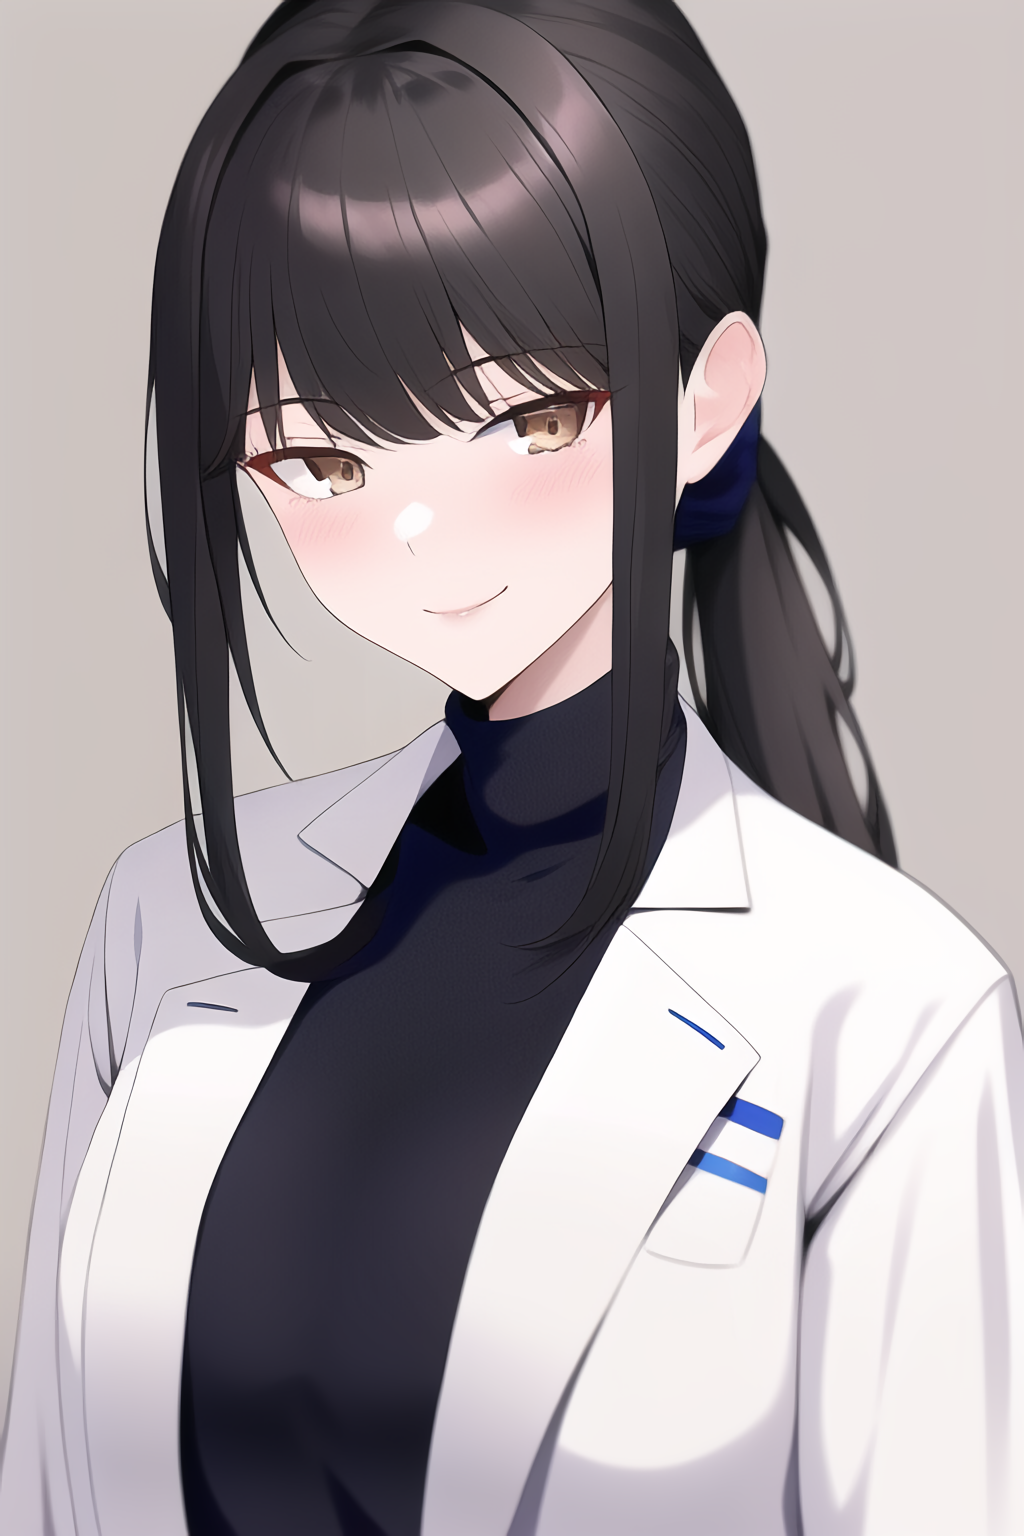 Anime 1024x1536 anime girls black hair ponytail brown eyes smiling white coat turtlenecks AI art portrait